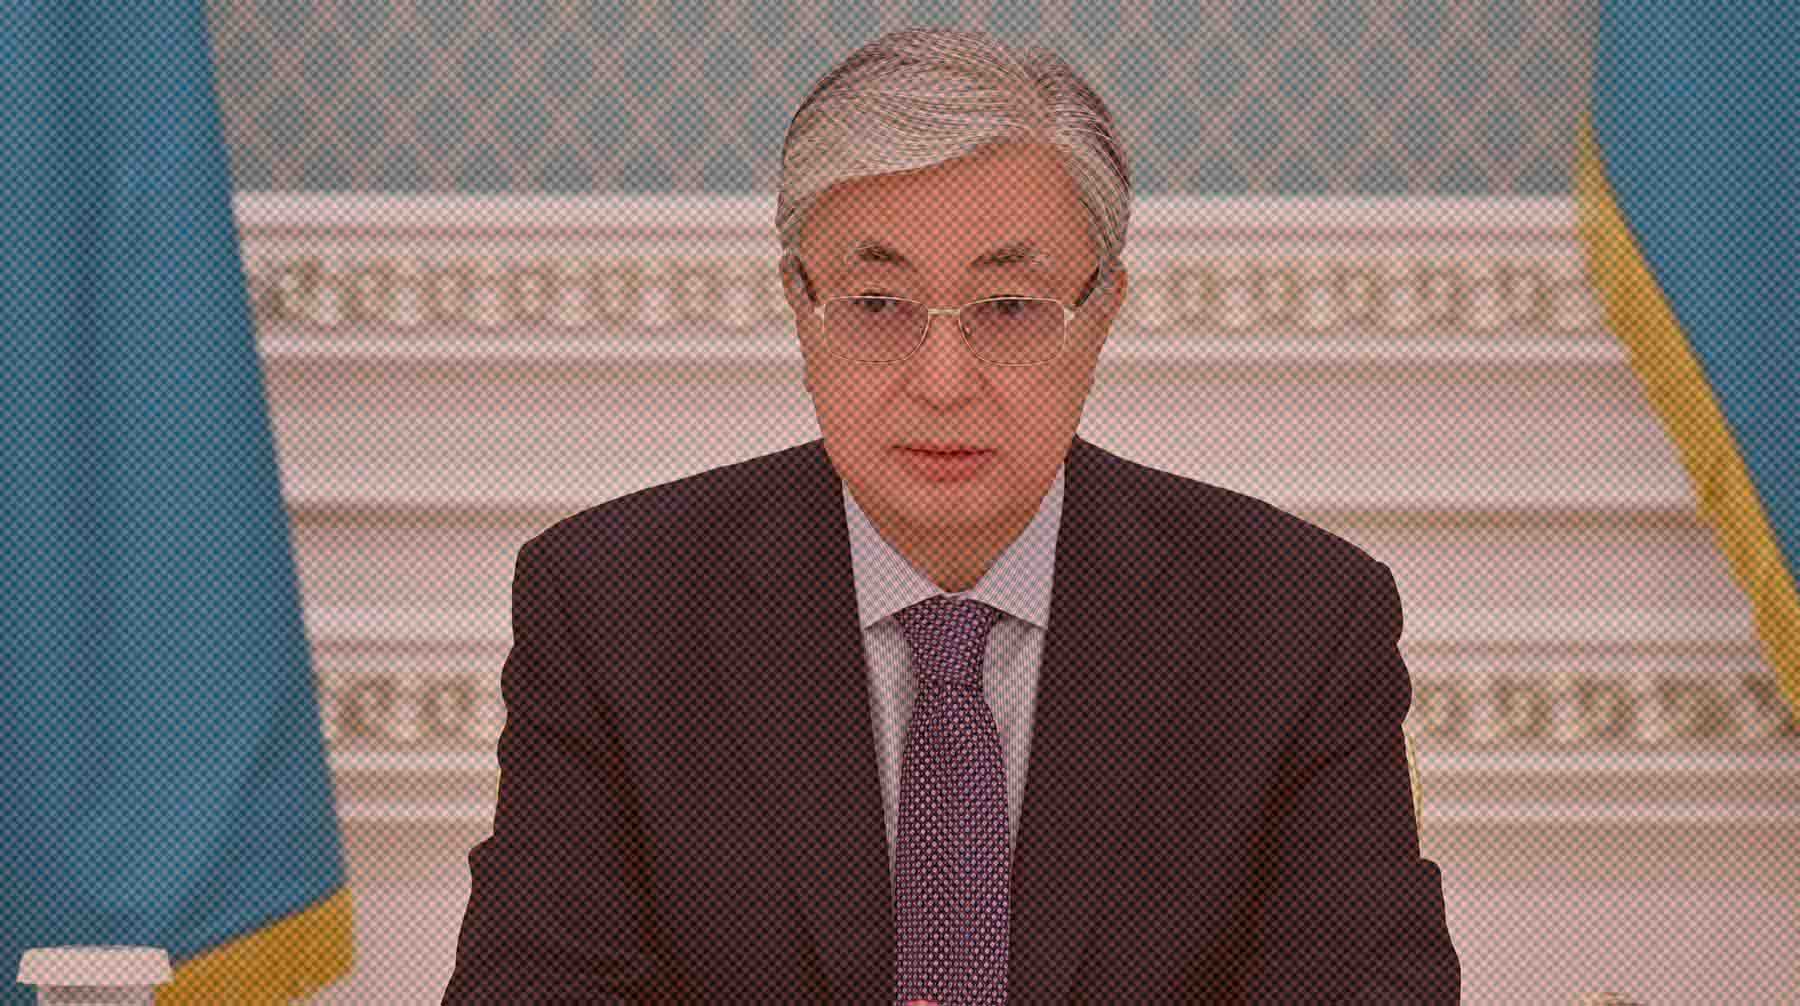 Миссия альянса в республике завершена, сказал глава казахстанского государства Фото: Global Look Press / сайт президента Казахстана